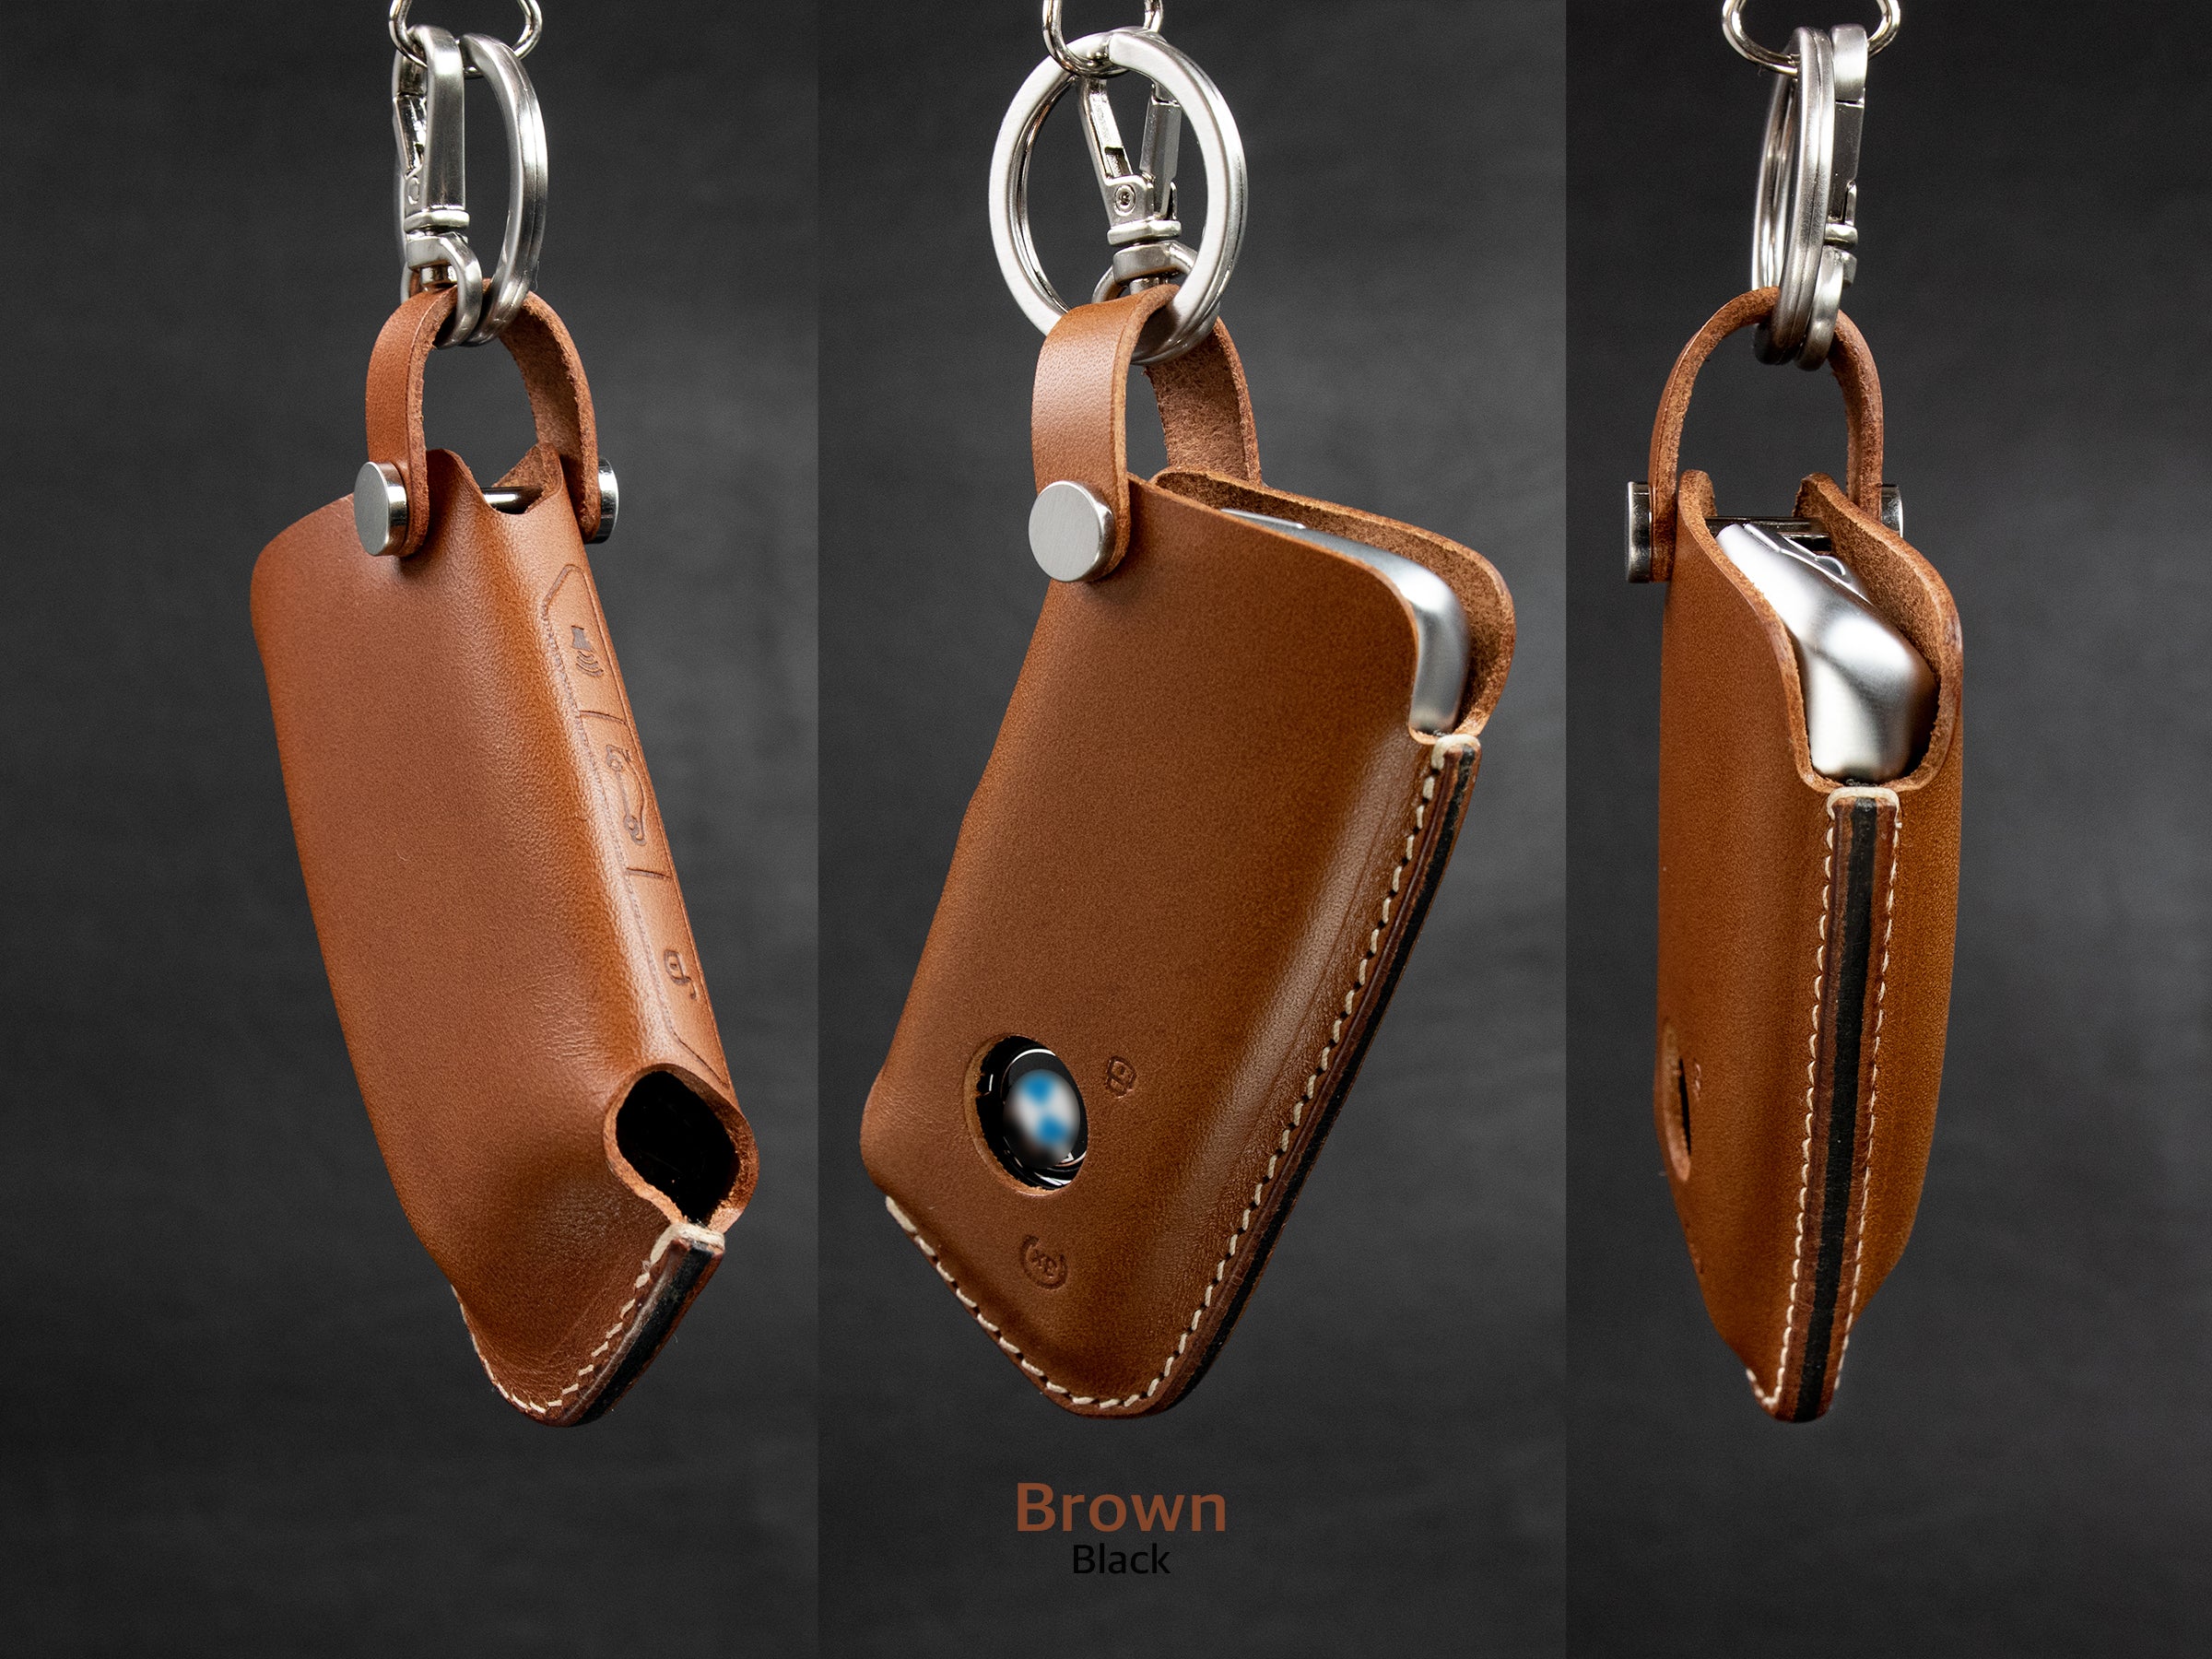 BMW Key Cases Online – Leather Brut